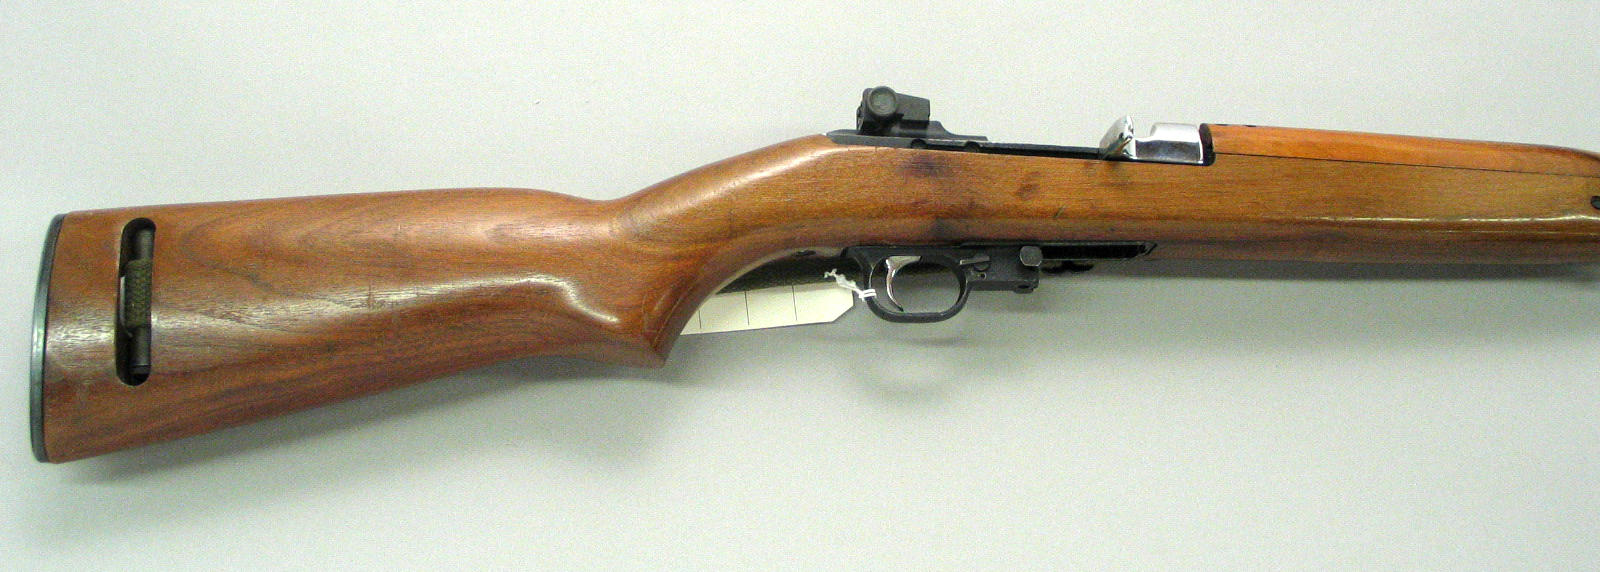 1958 universal m1 carbine serial number lookup